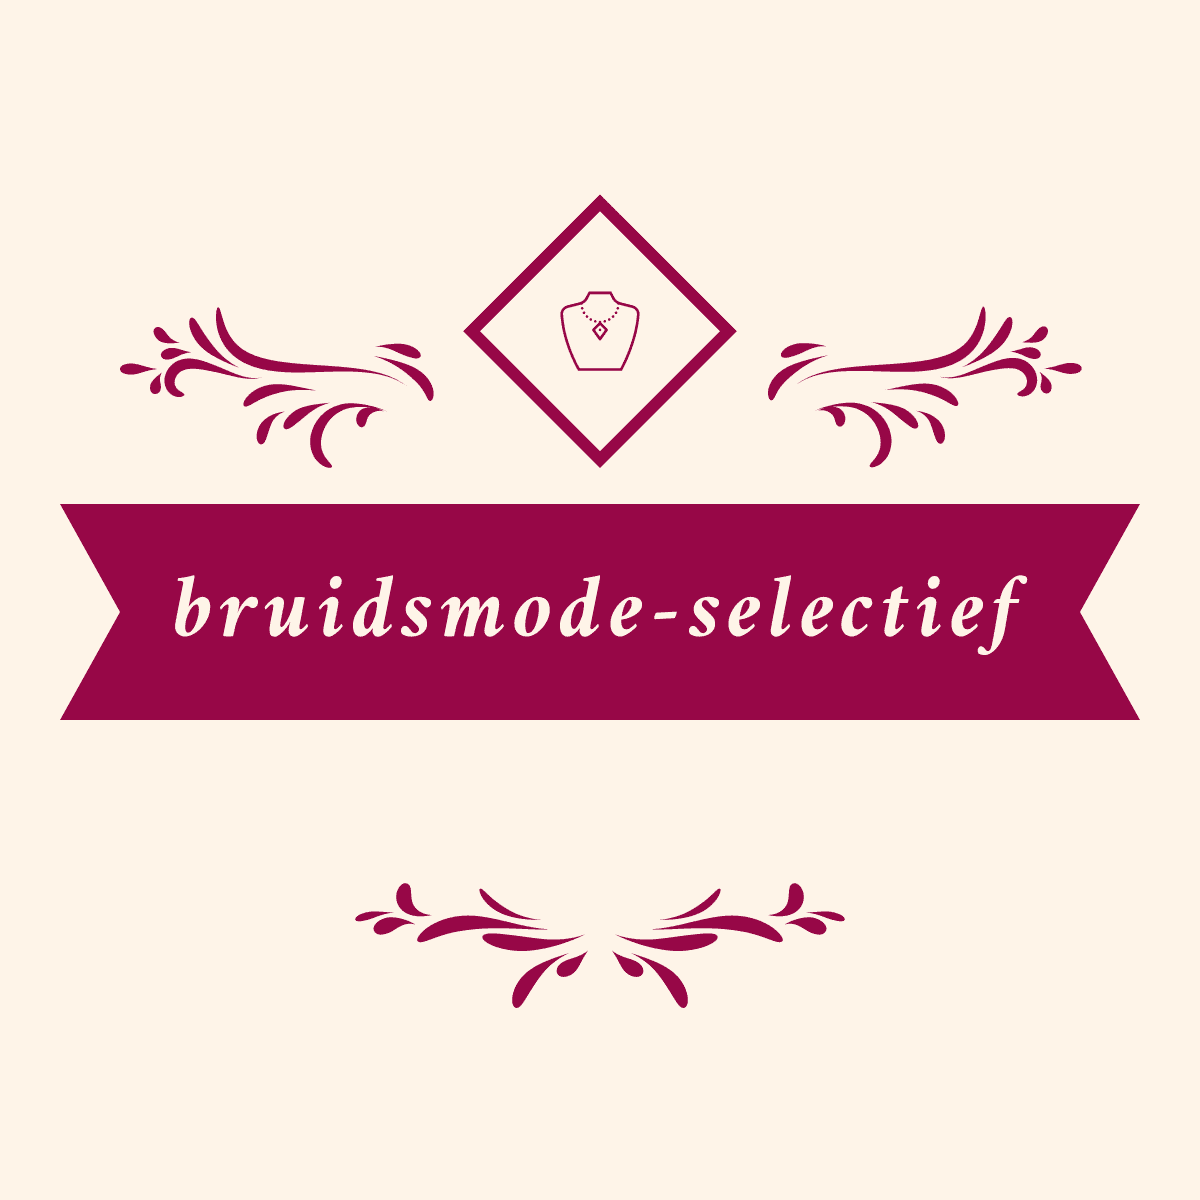 Bruidsmode-selectief